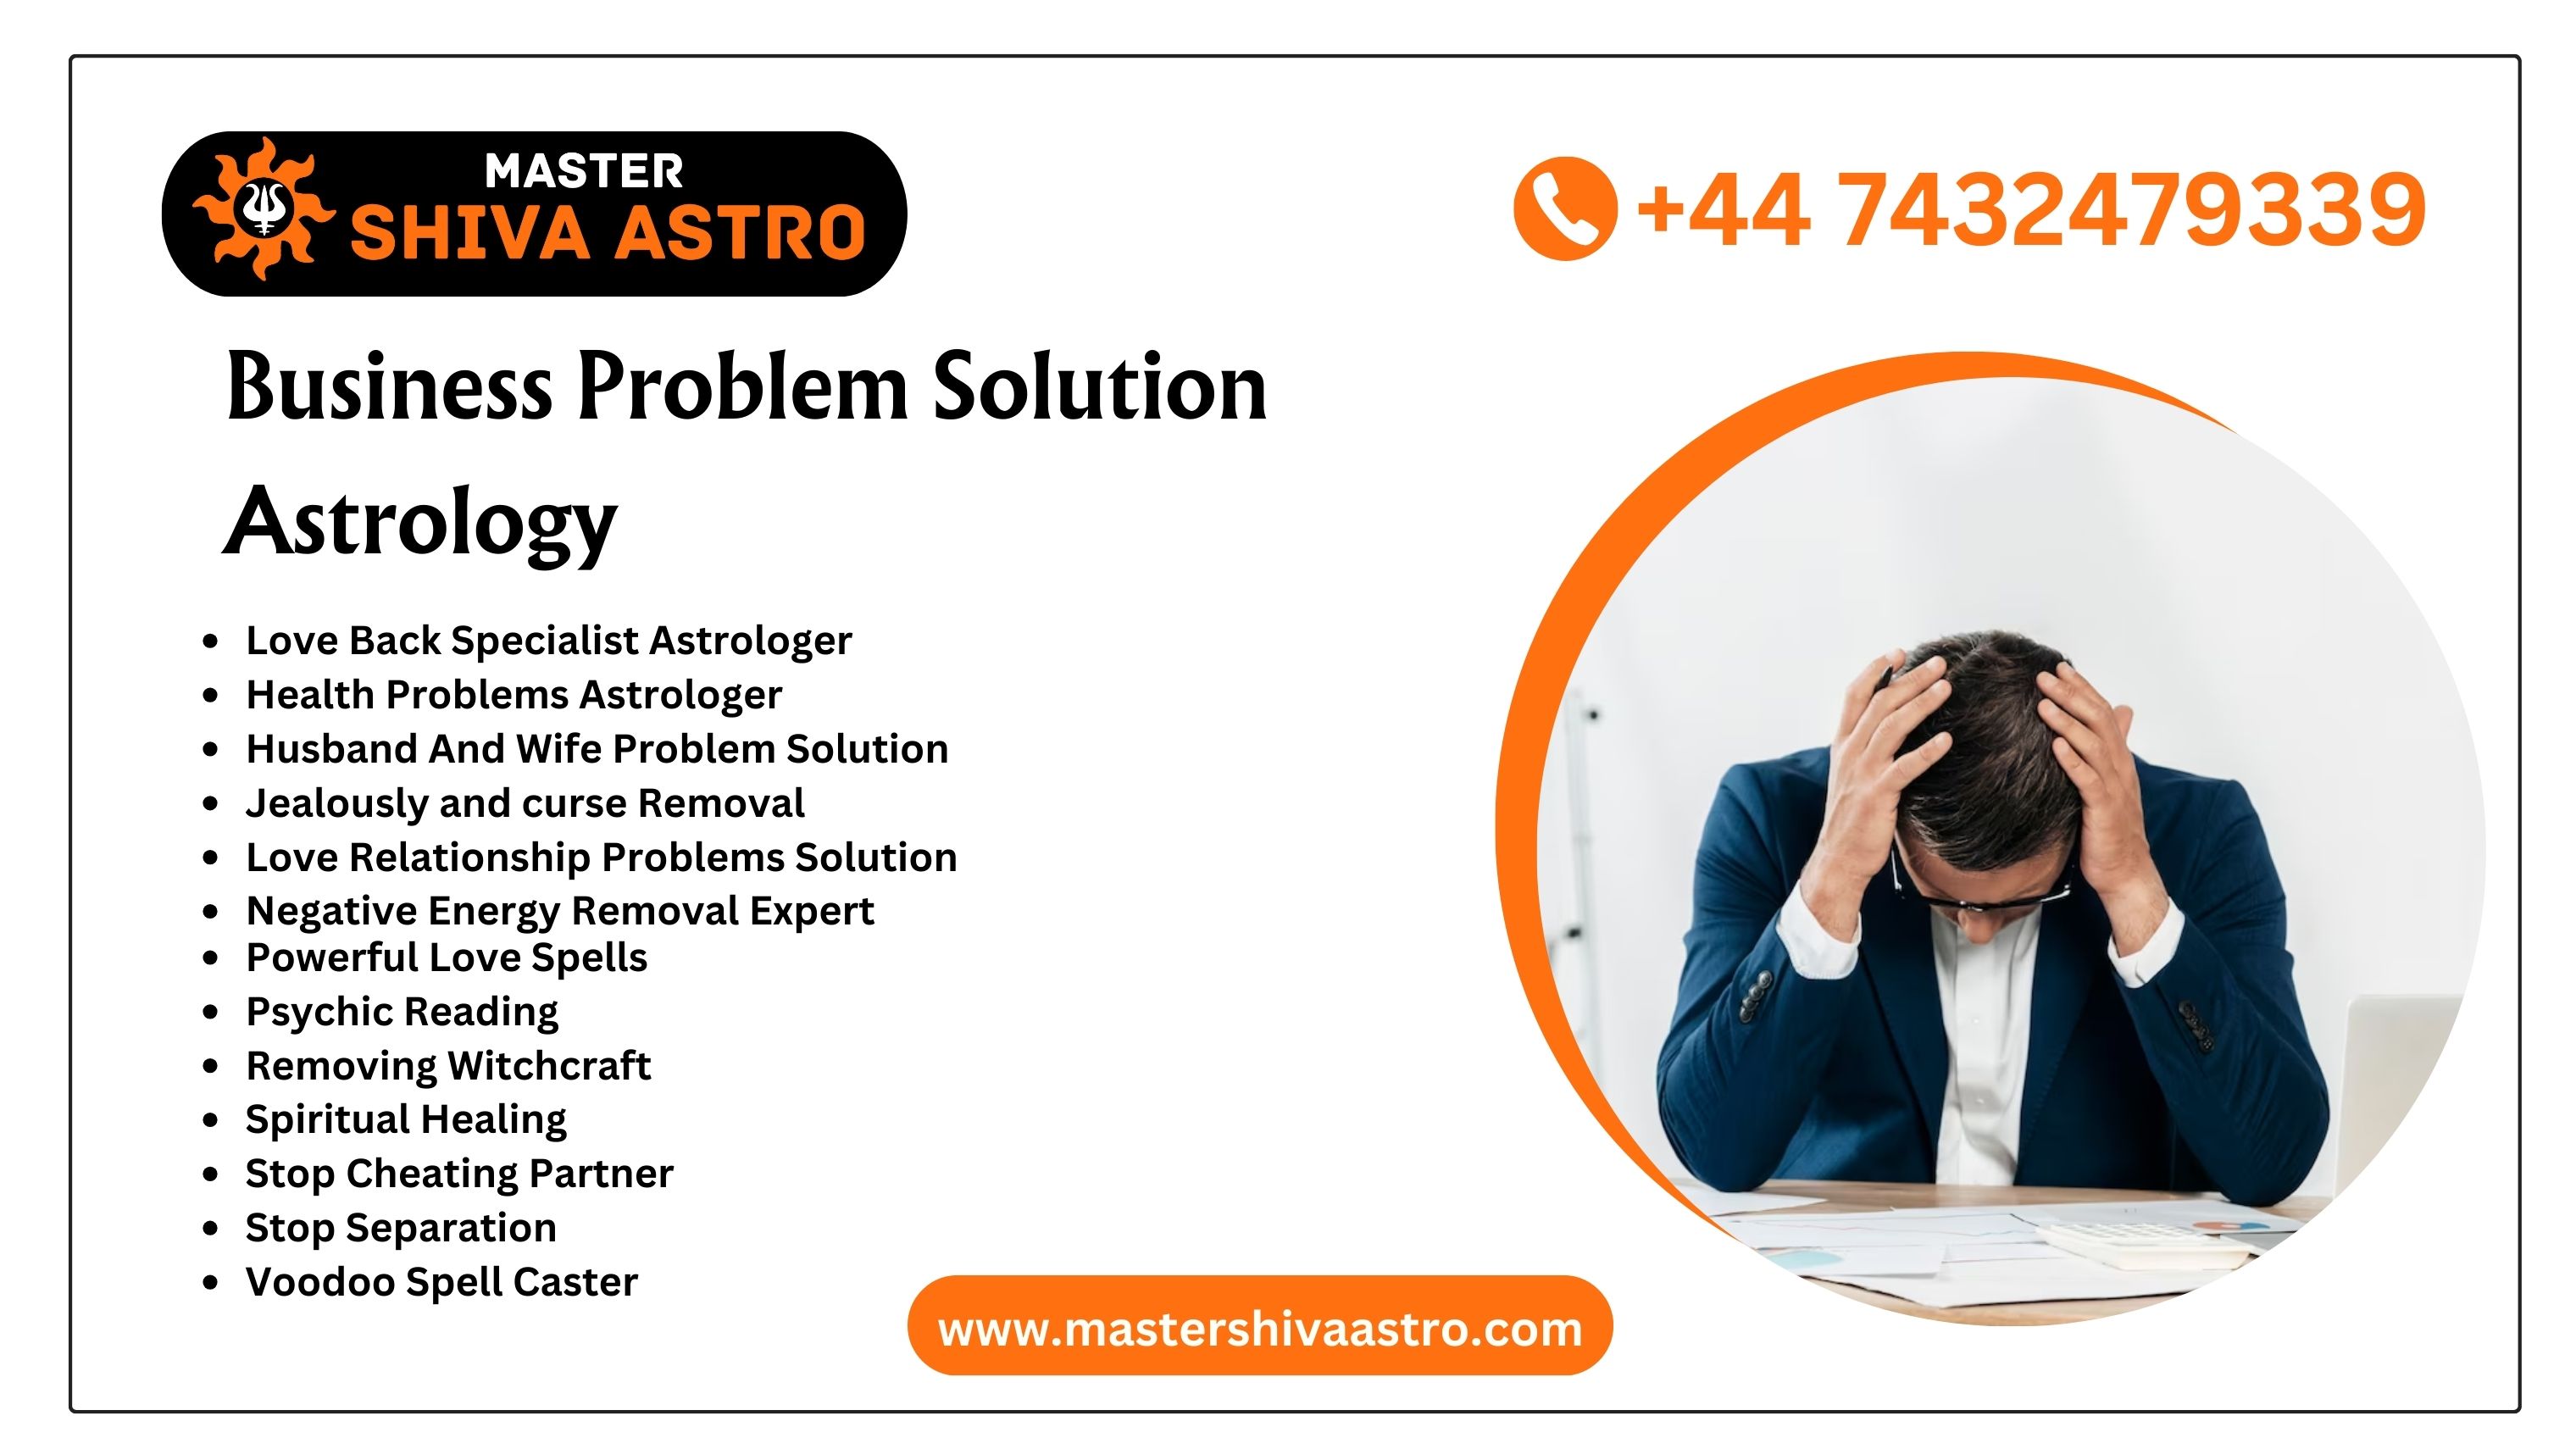 Business Problem Solution Astrology - Master Shiva